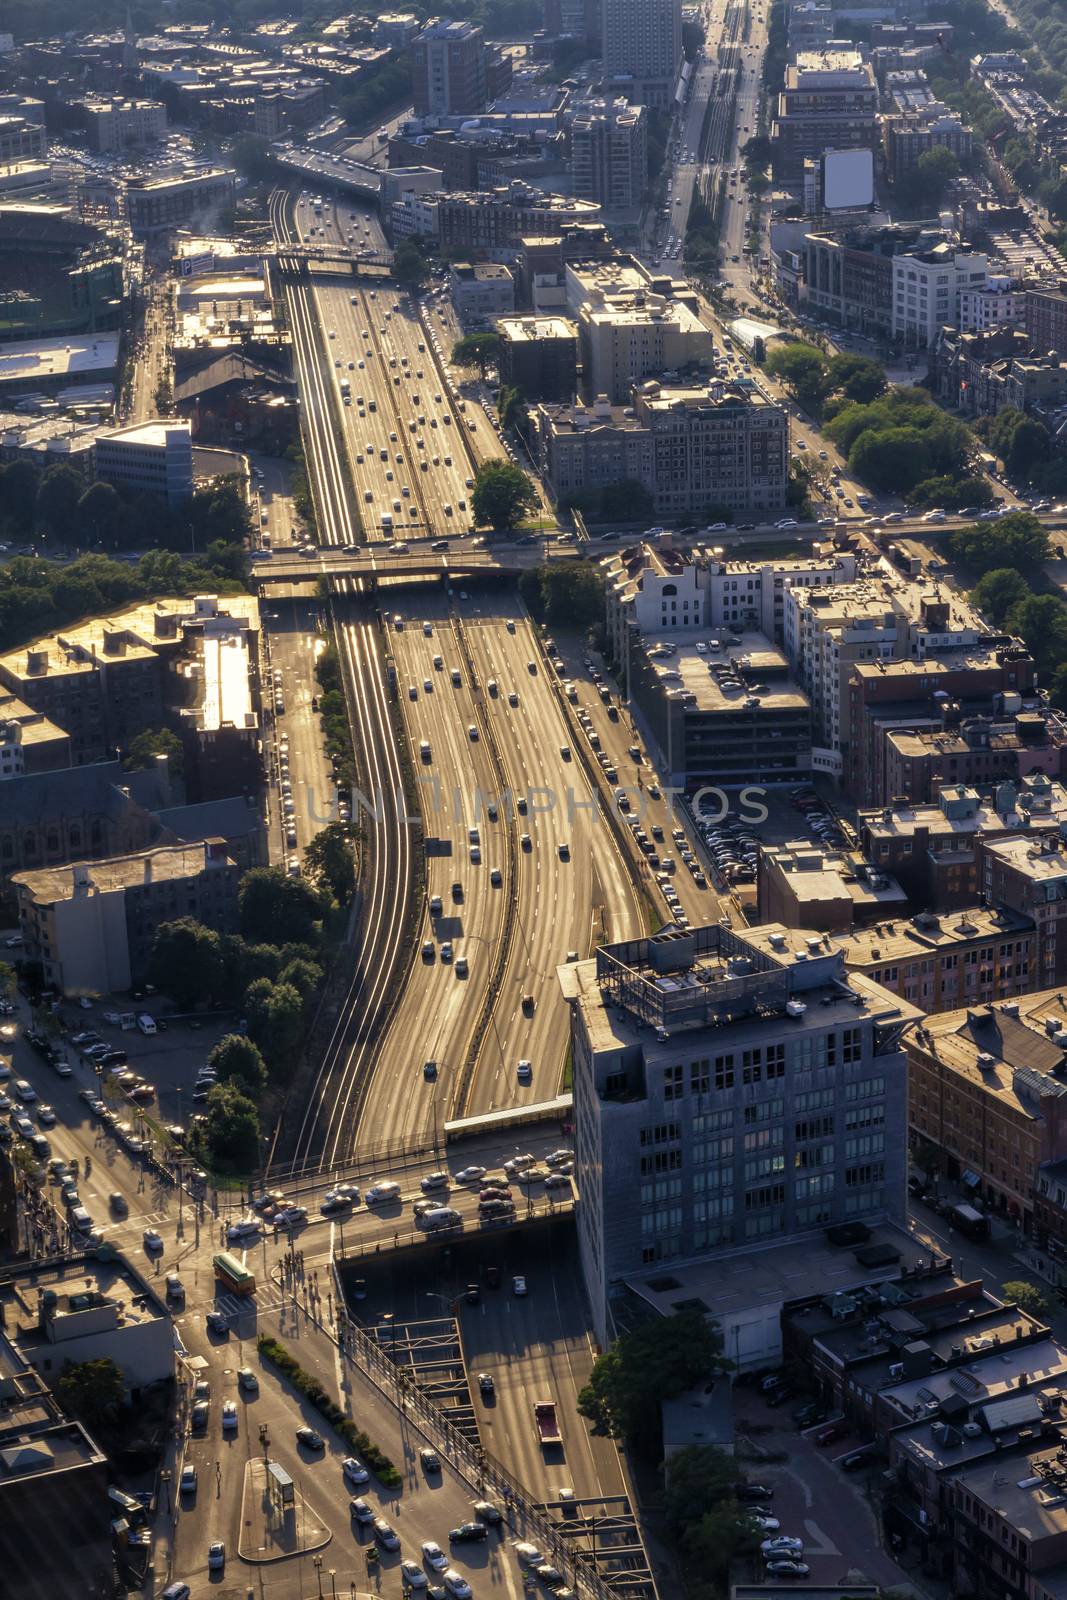 Aerial view of Highway, I-90, Massachusetts Turnpike, Boston, US by Tjeerdkruse